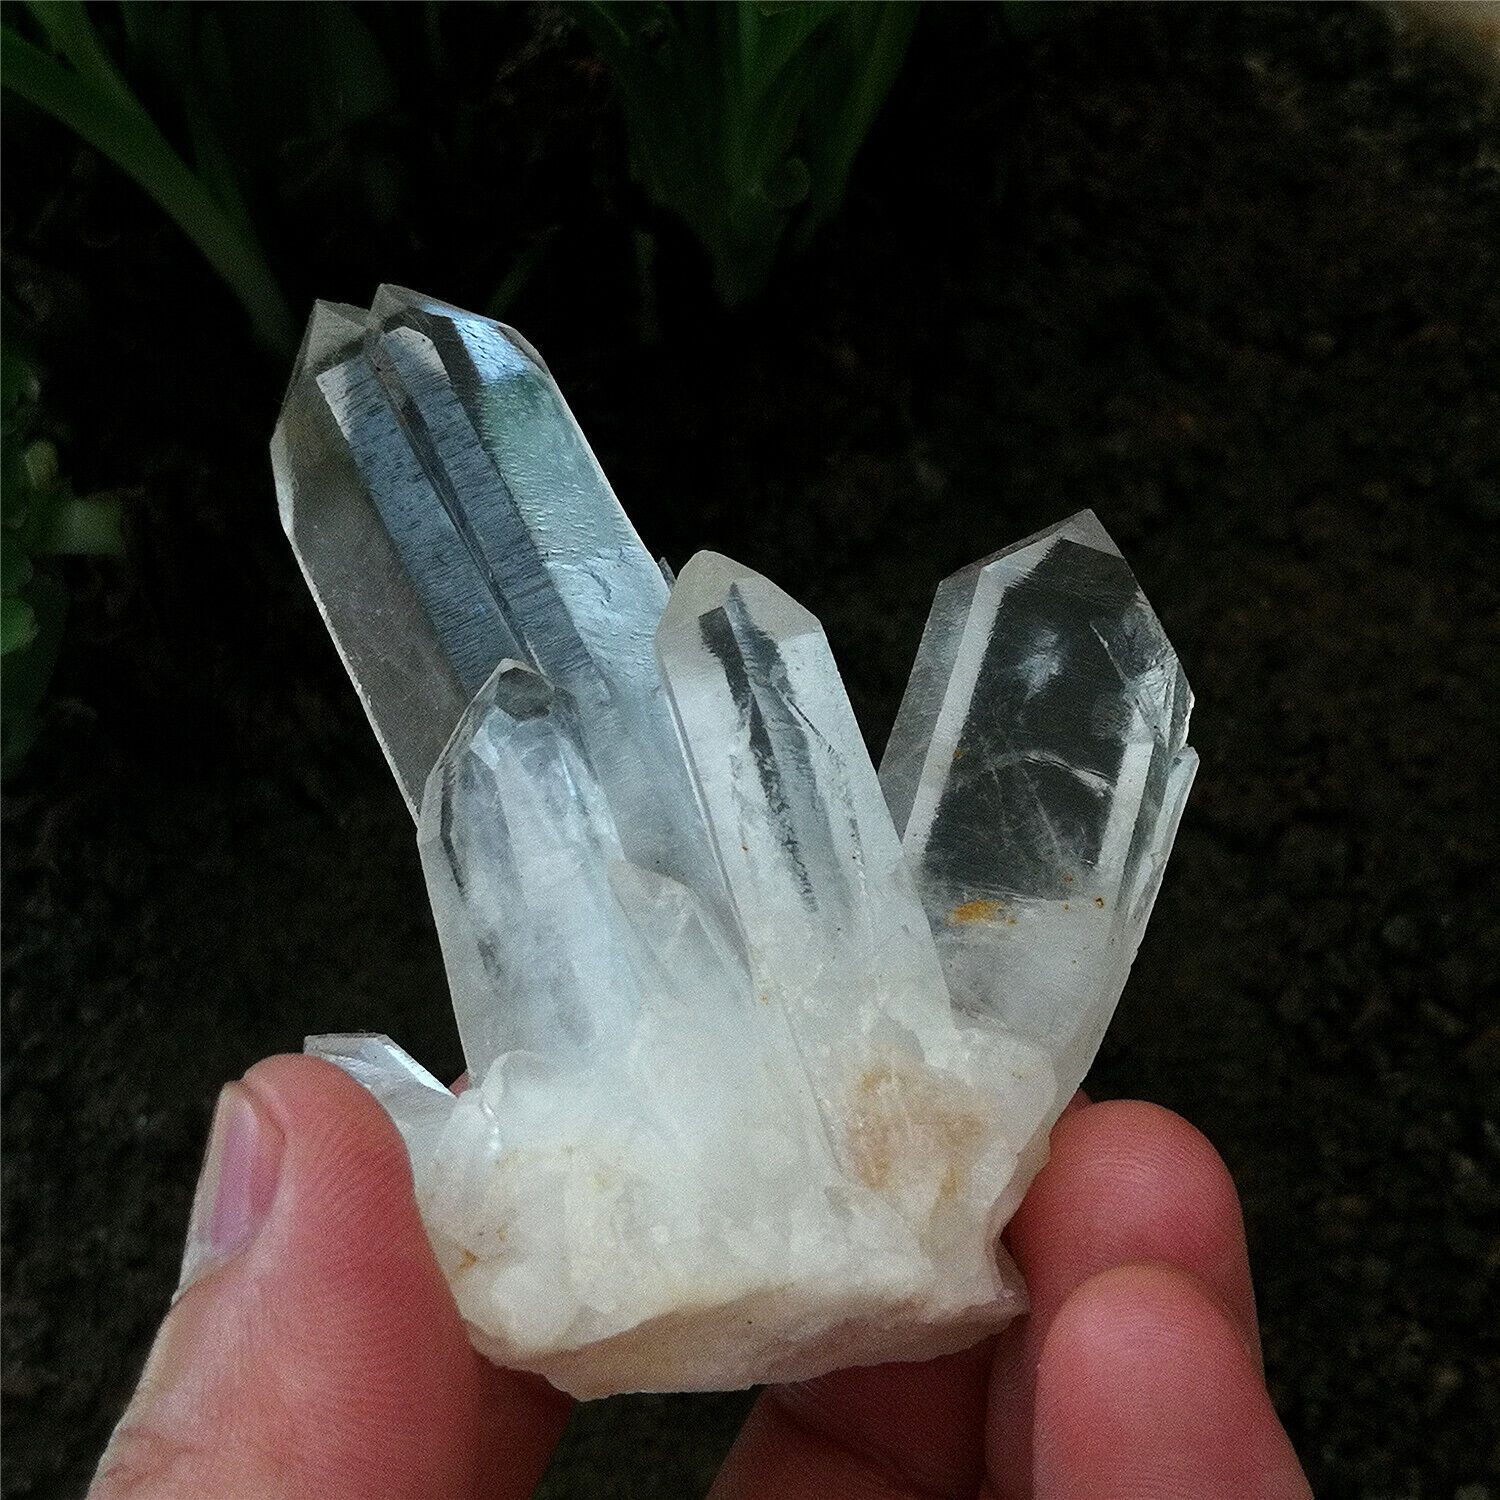 91g 72mm Rare Healing Quartz Flower Natural Clear Crystal Cluster Point Specimen